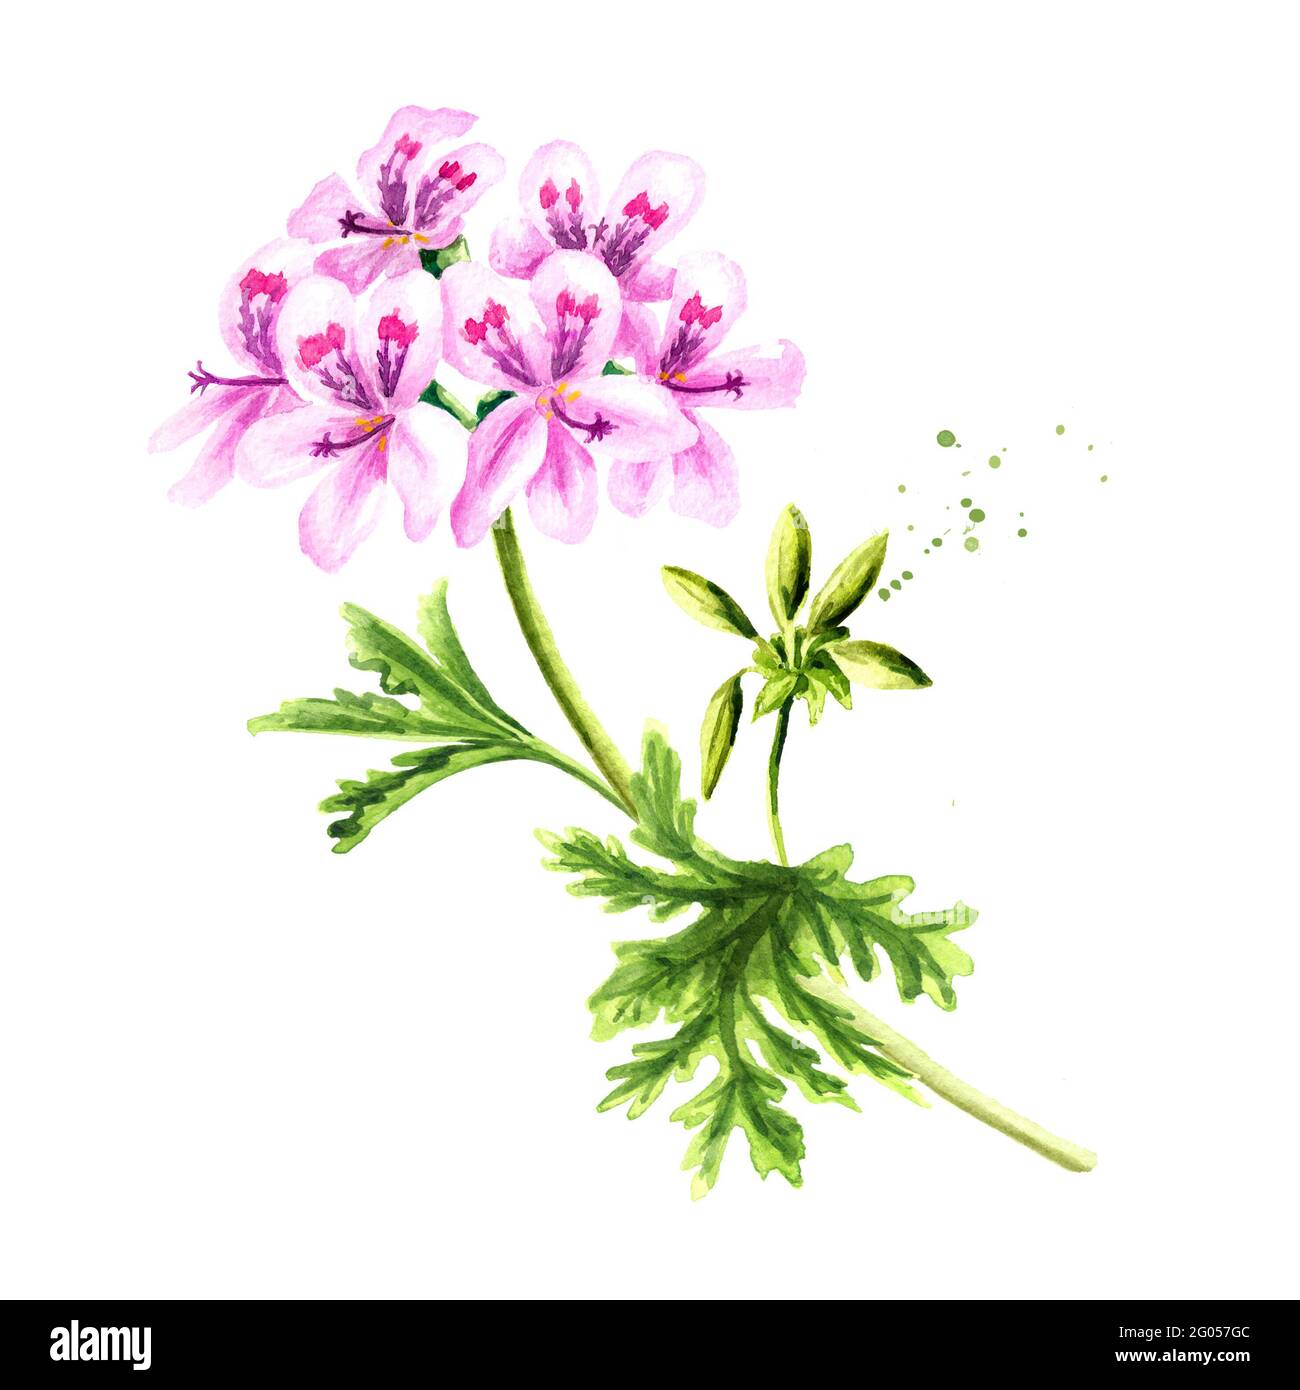 Pelargonium graveolens or Pelargonium x asperum, geranium plant, flower with leaves. Watercolor hand drawn illustration, isolated on white background Stock Photo